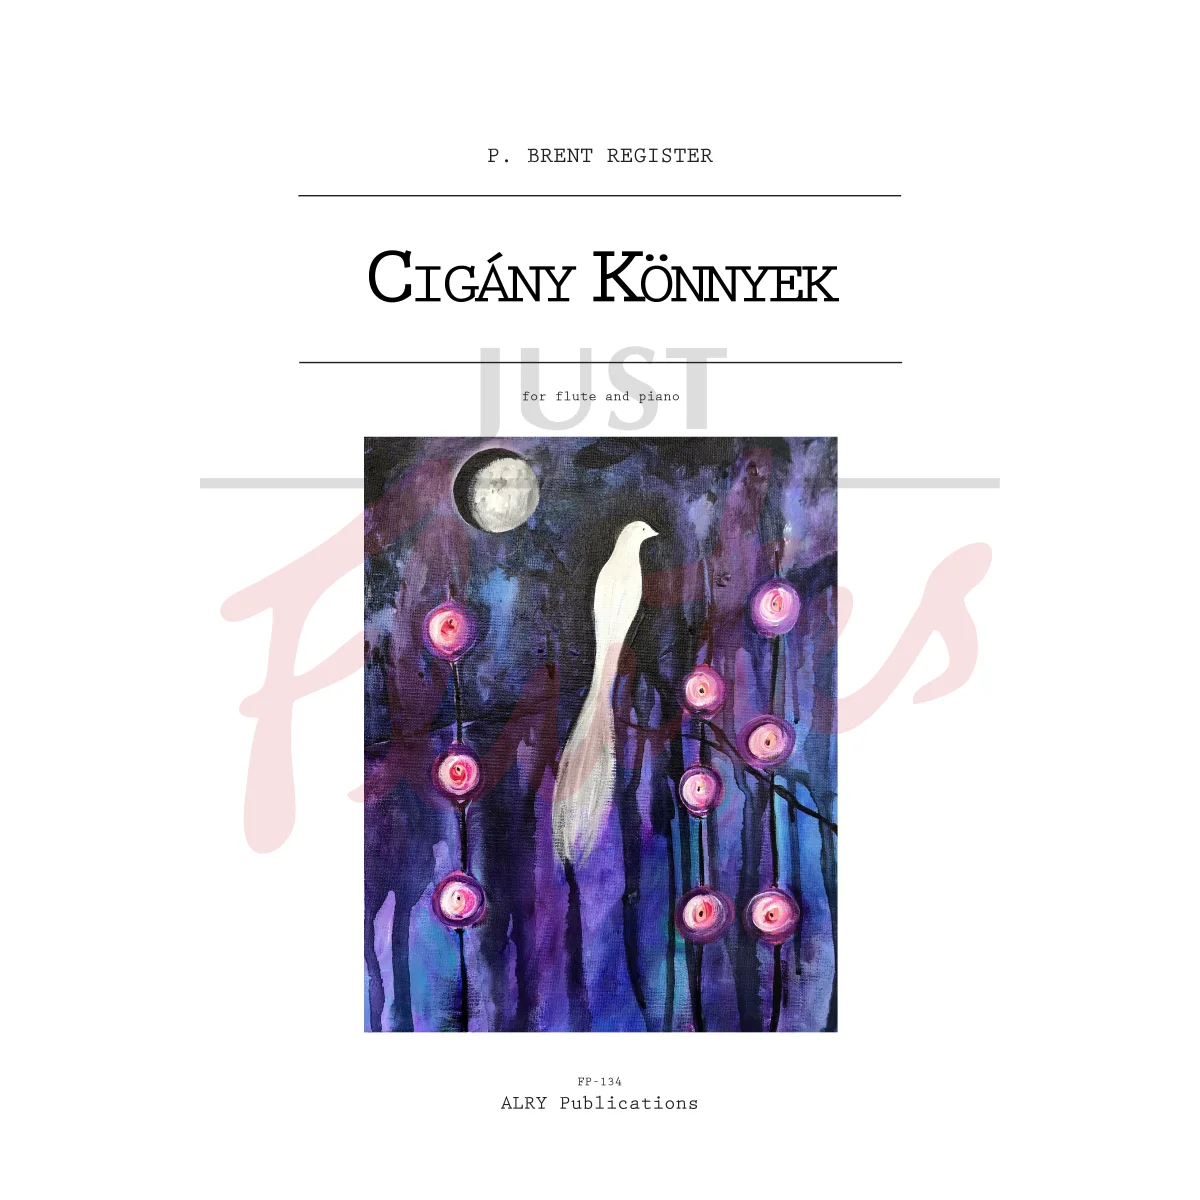 Cigány Könnyek (Gypsy Tears) for Flute and Piano